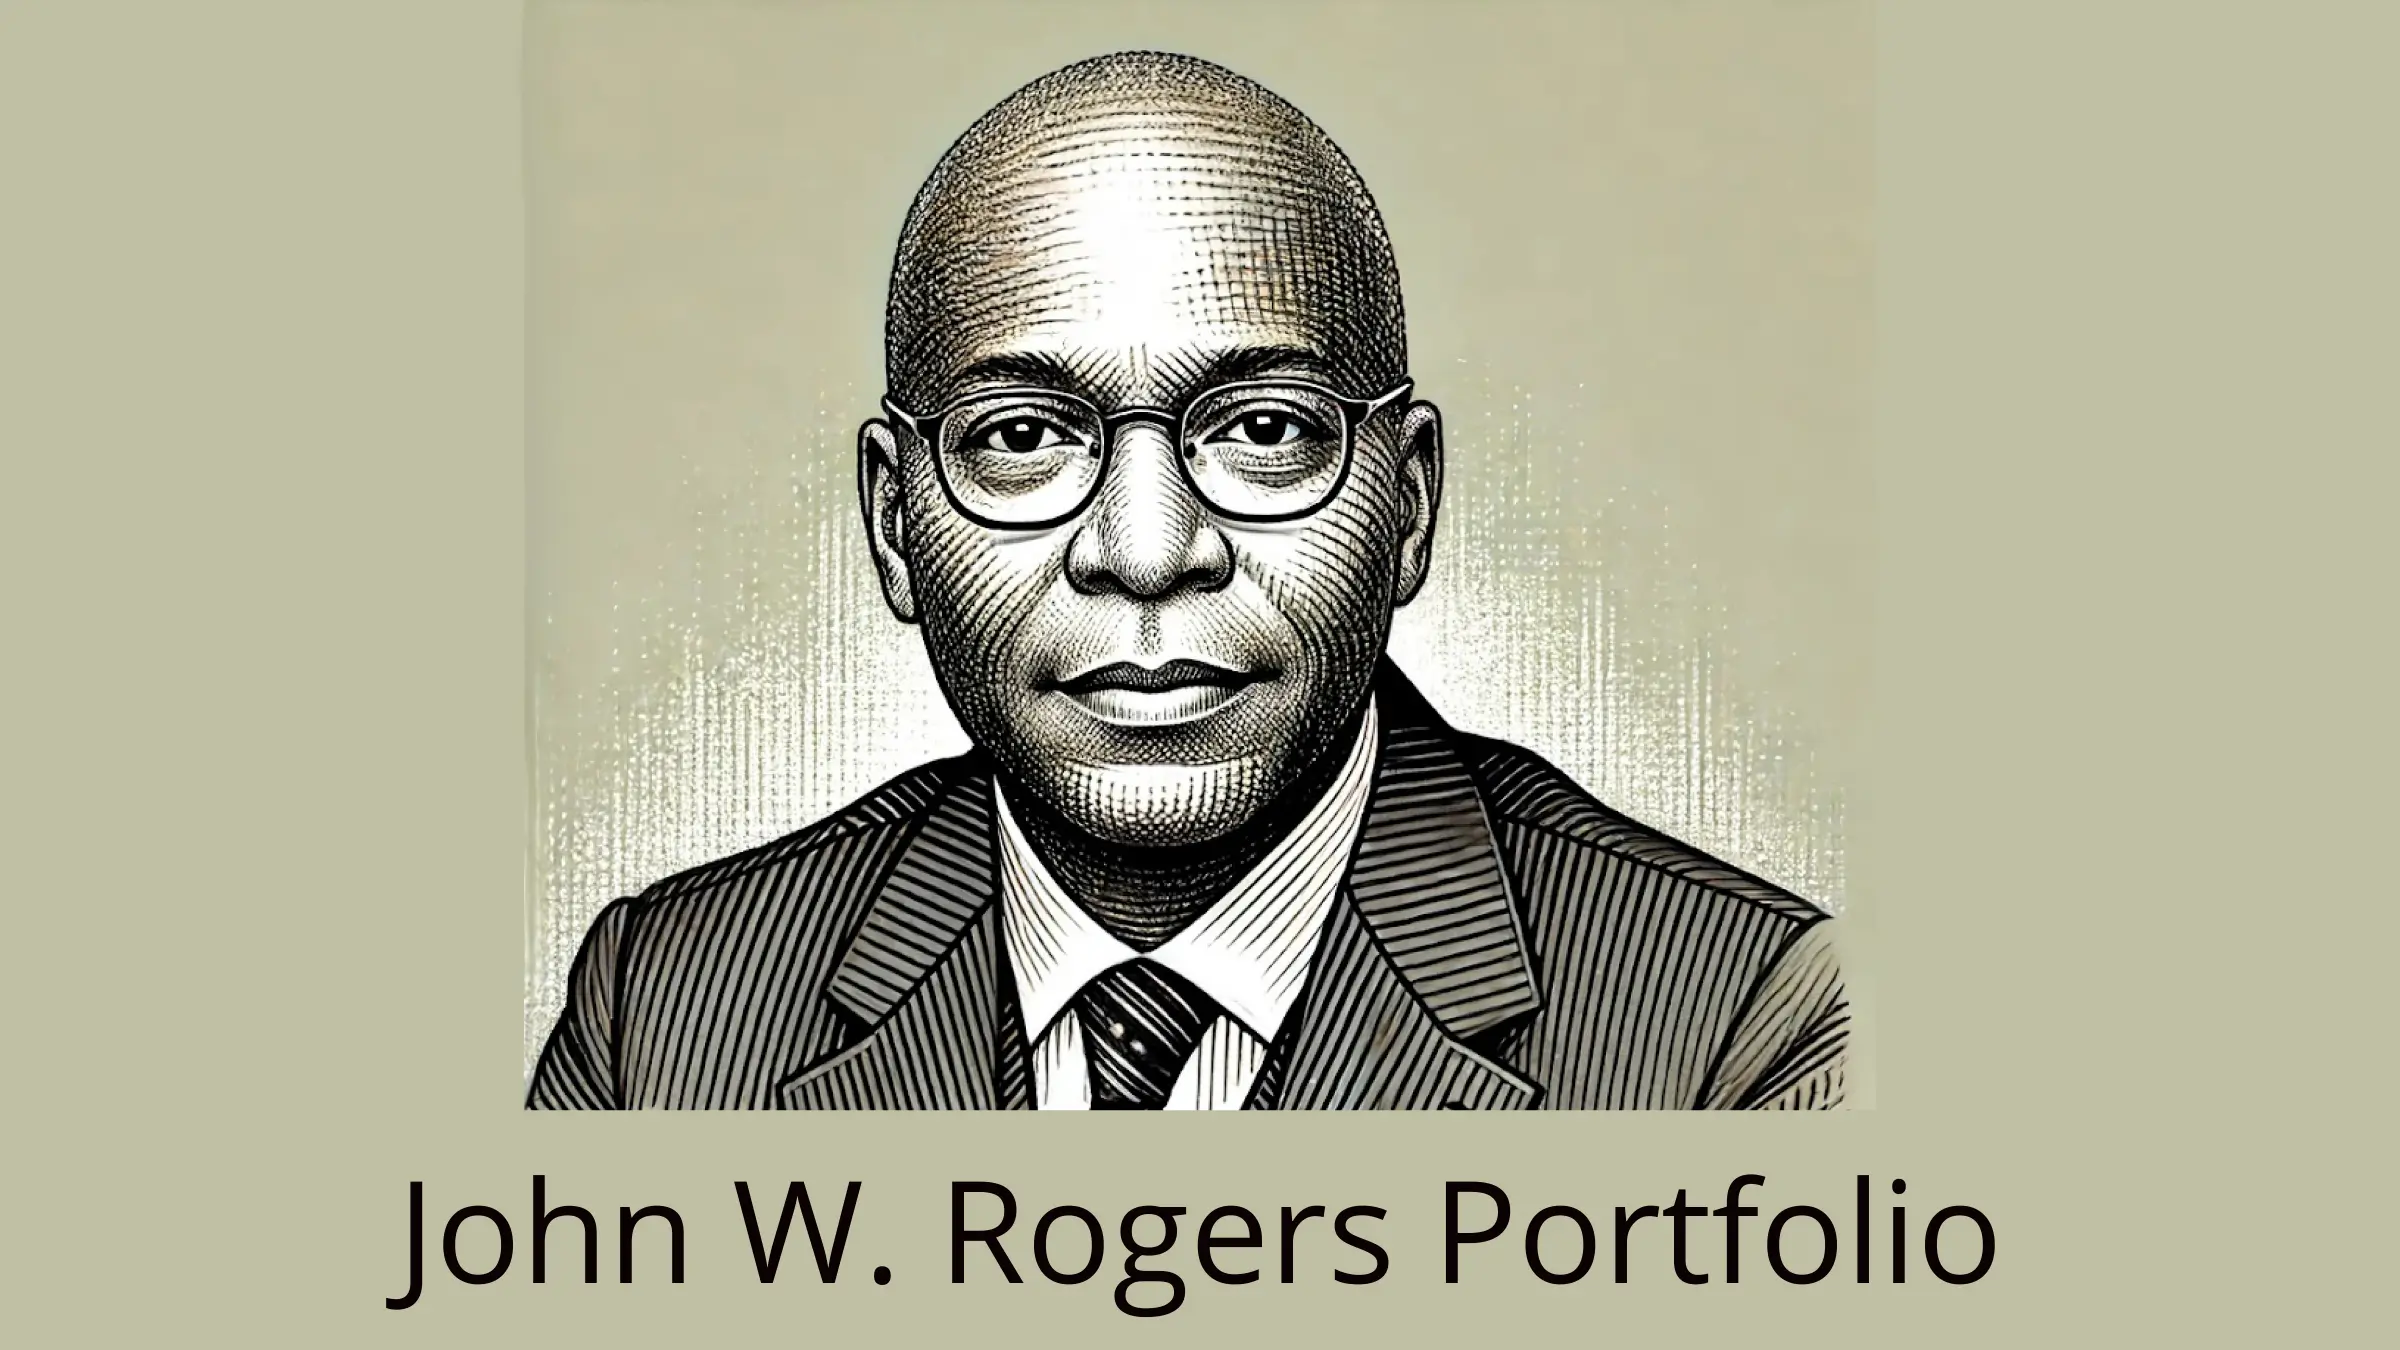 John W. Rogers Portfolio